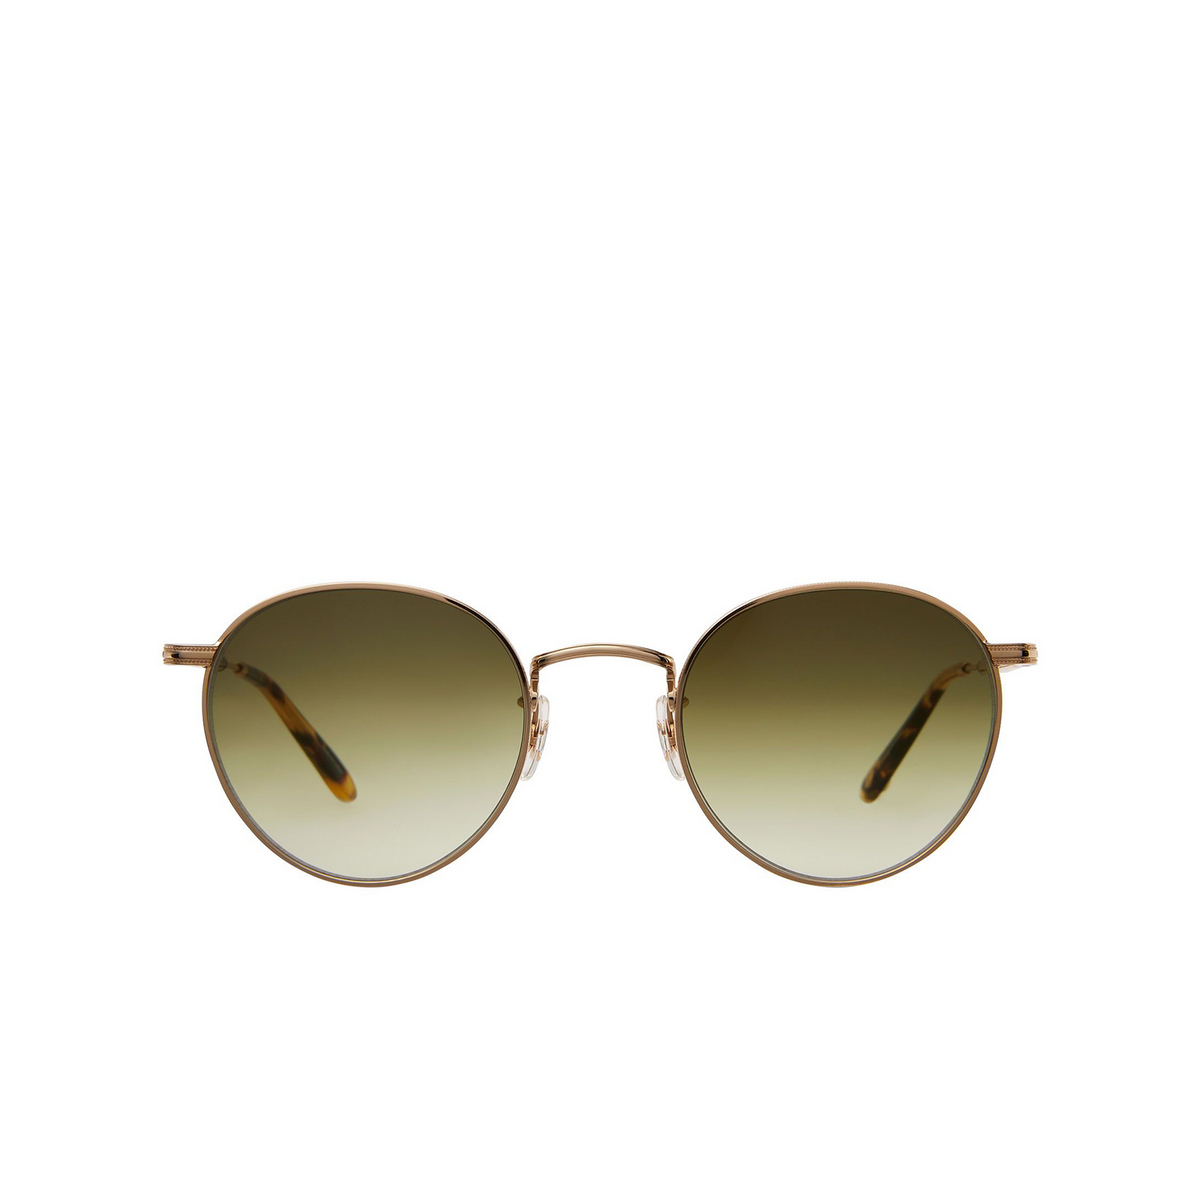 Garrett Leight WILSON M Sunglasses G-DKT/SFOG Gold-Dark Tortoise/Semi-Flat Olive Gradient - front view